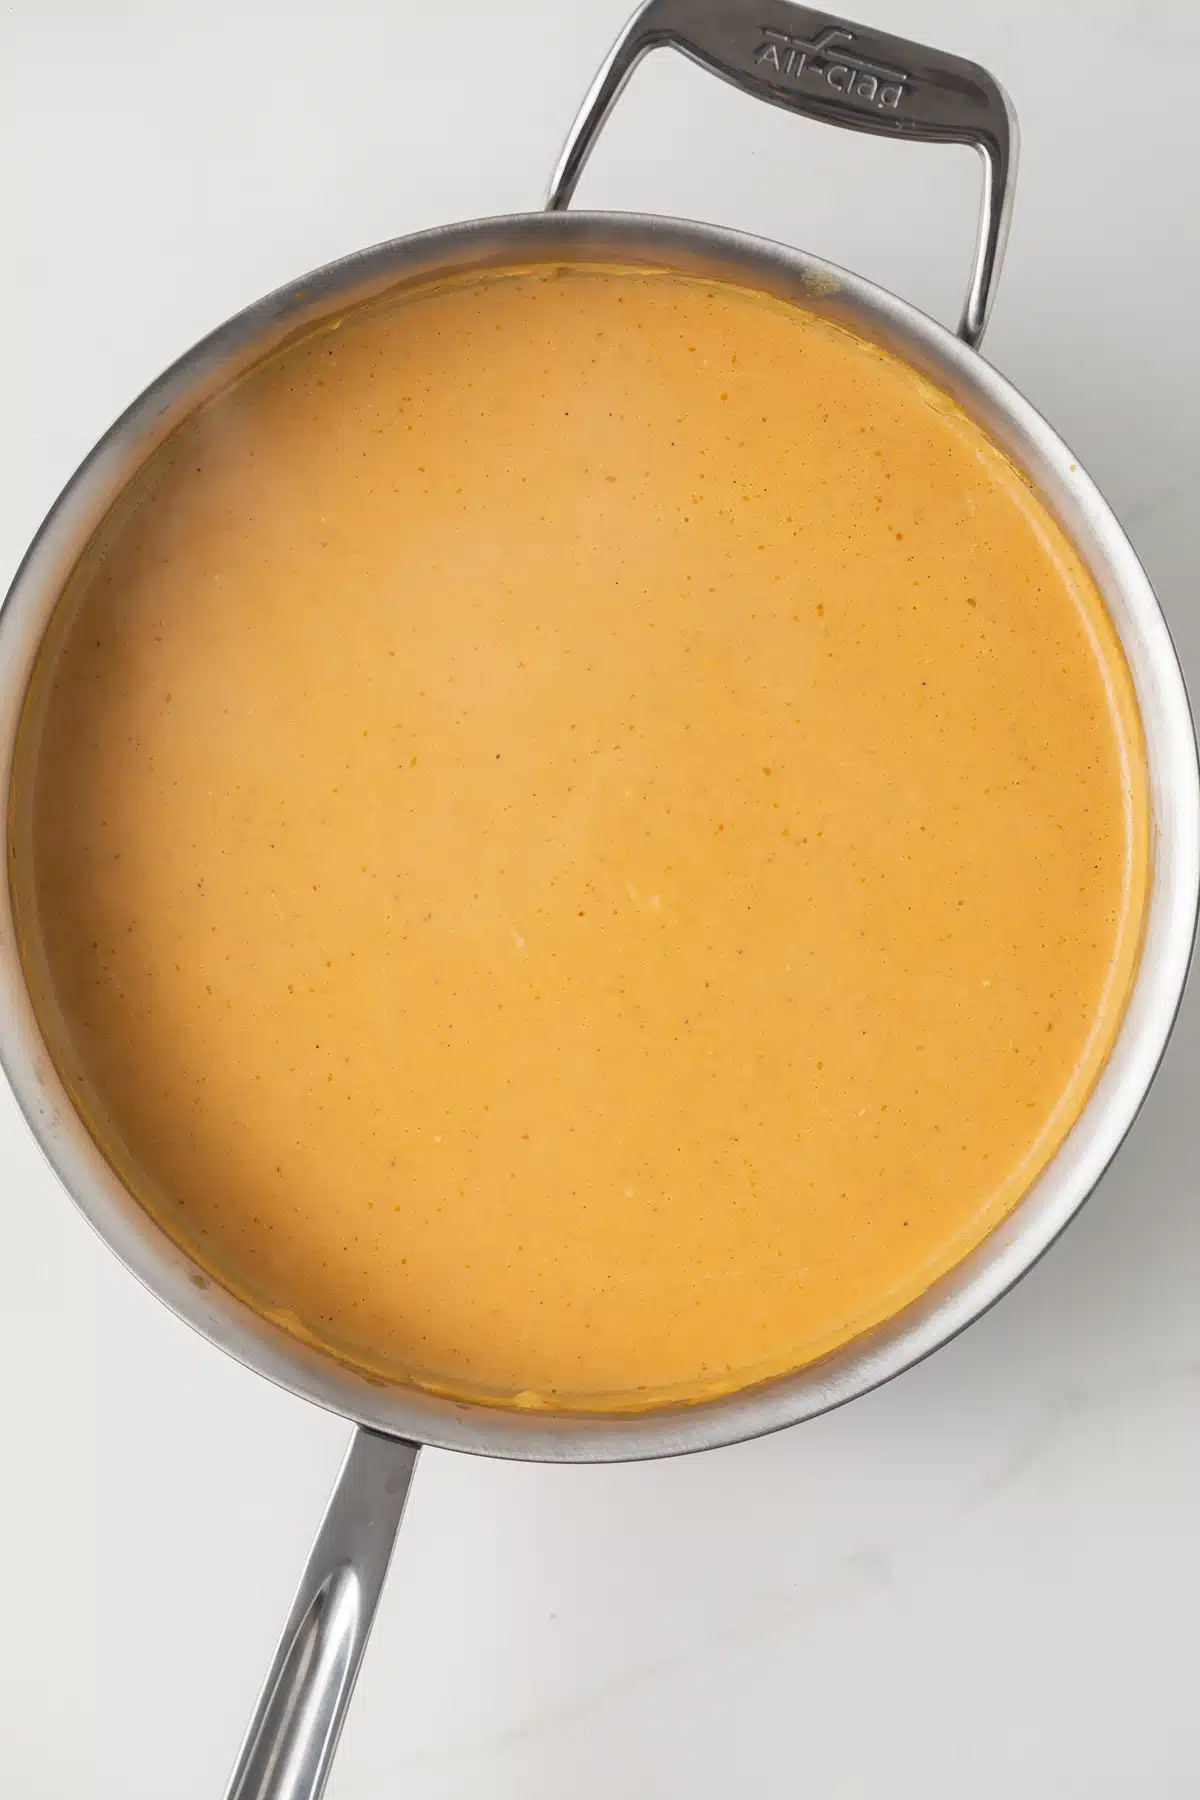 Pumpkin pasta sauce in a skillet.